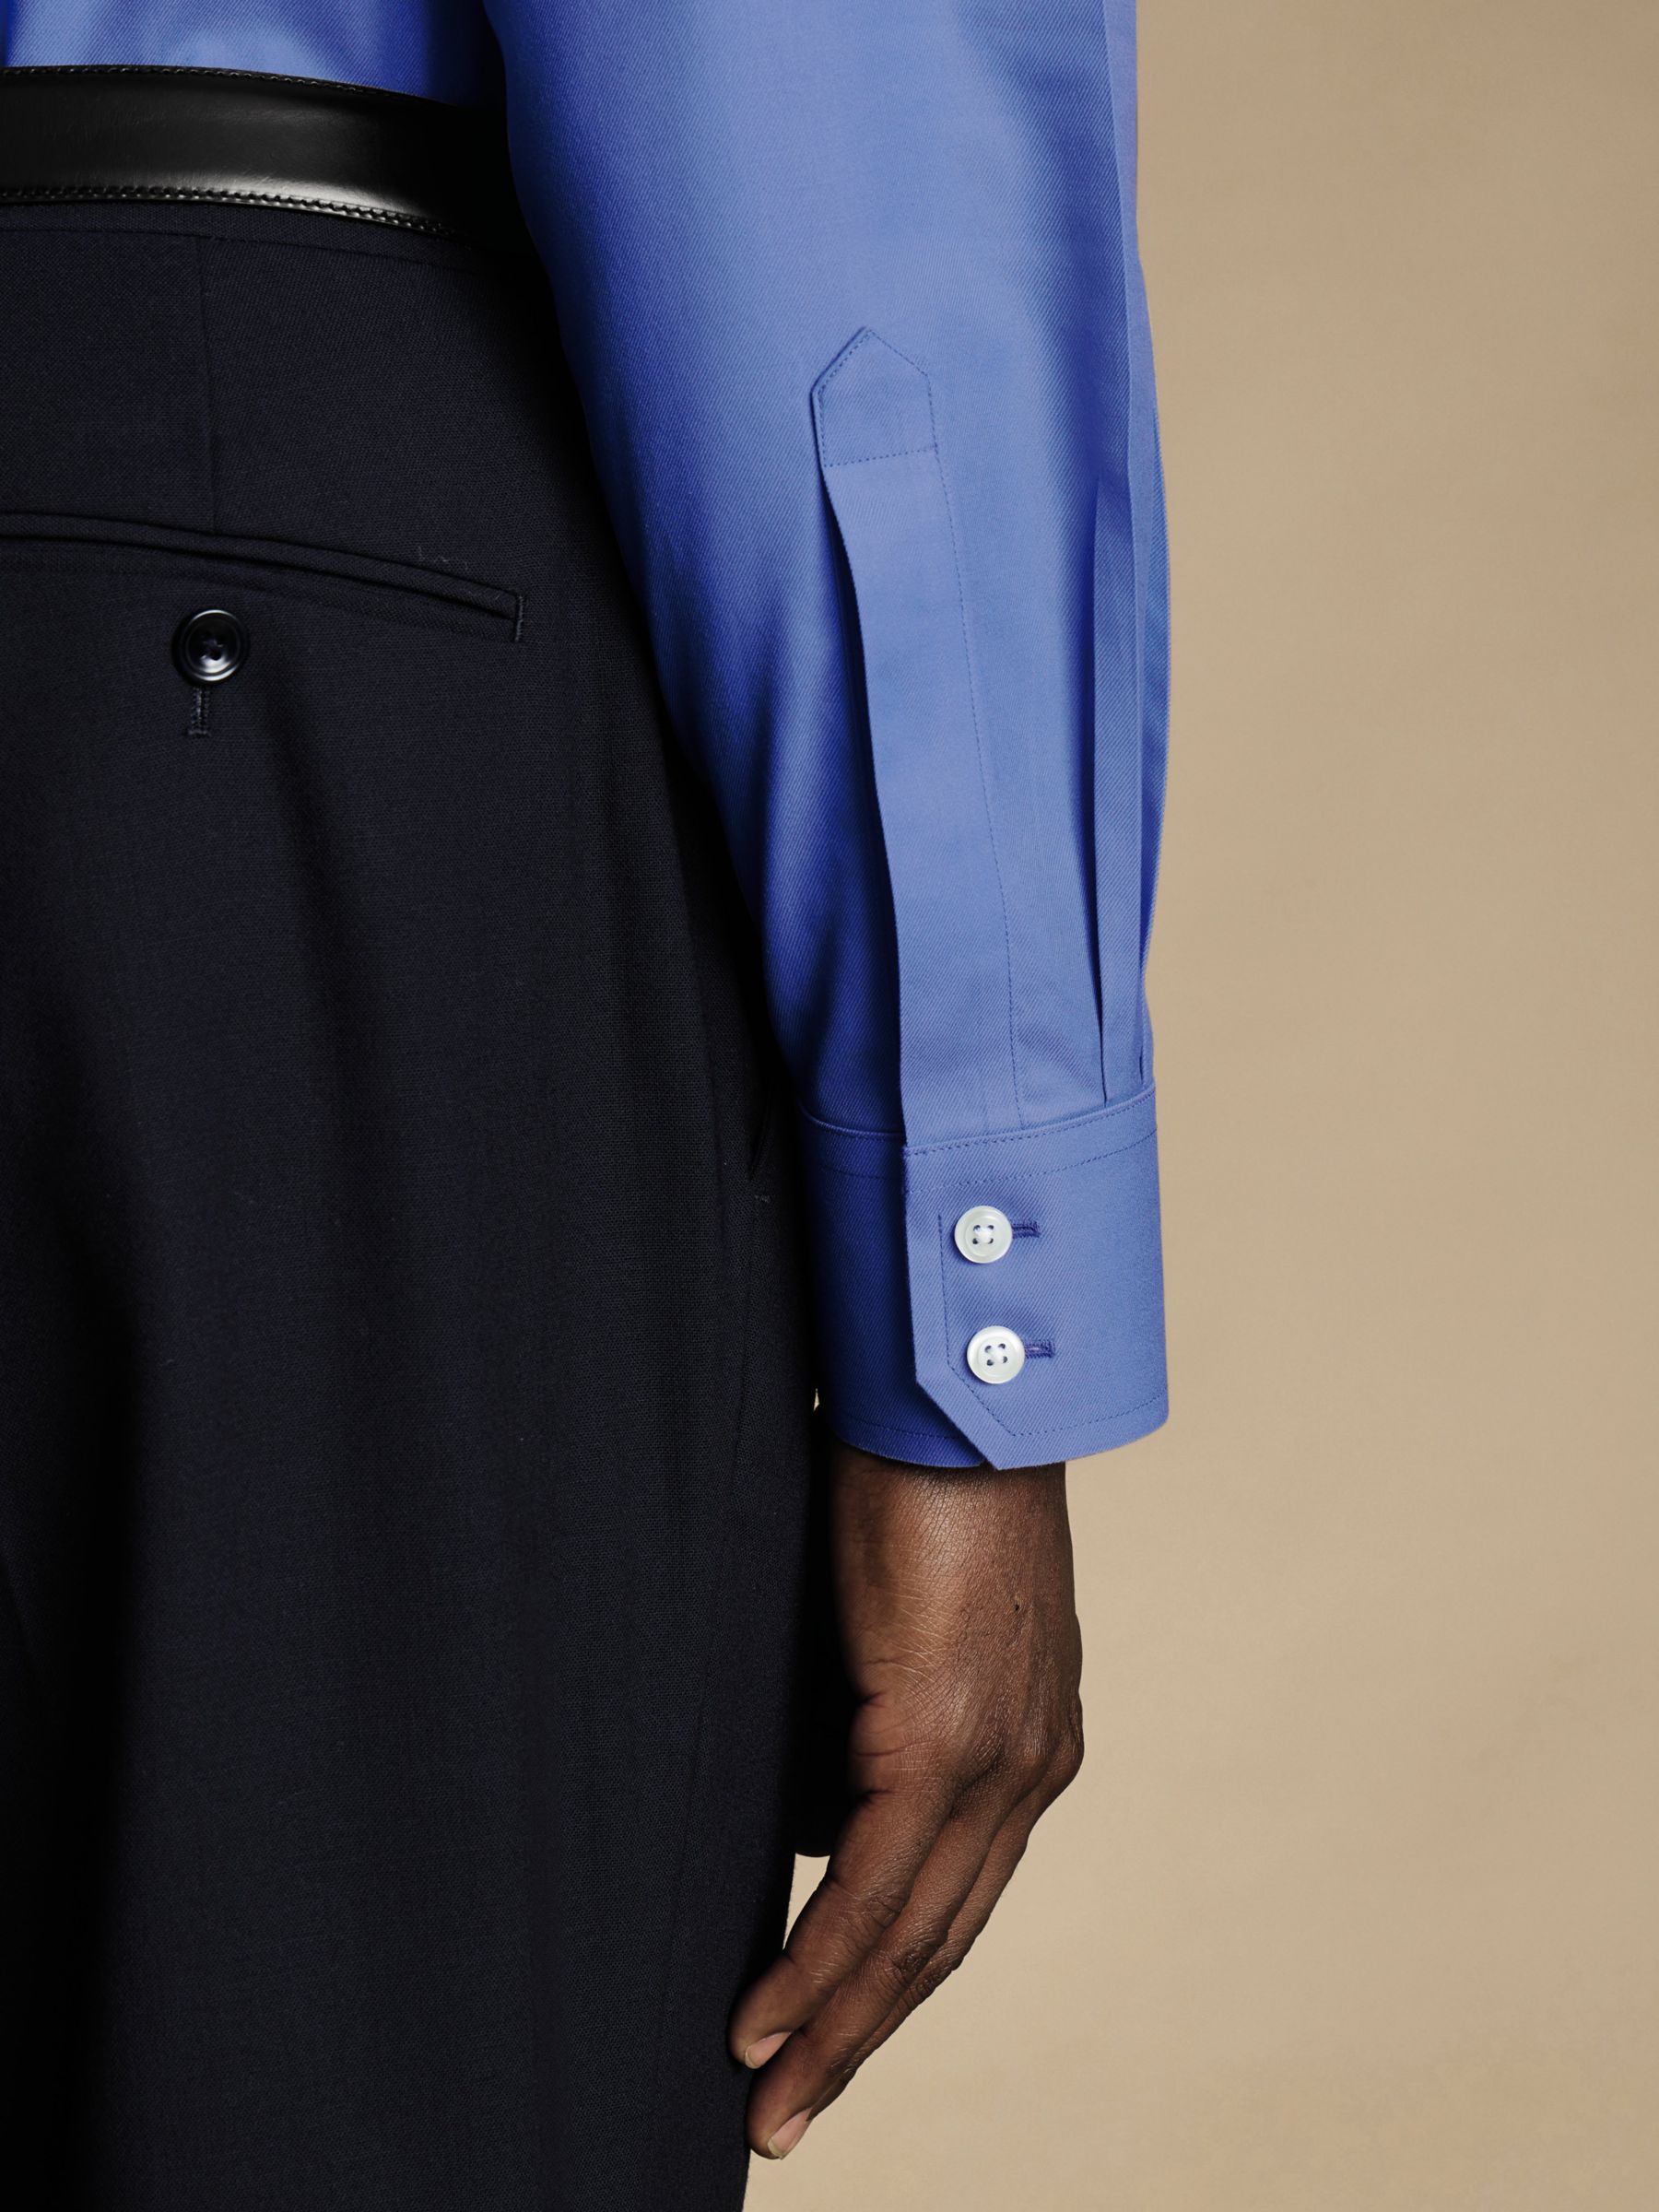 Charles Tyrwhitt Non-Iron Twill Shirt, Ocean Blue, 14.5